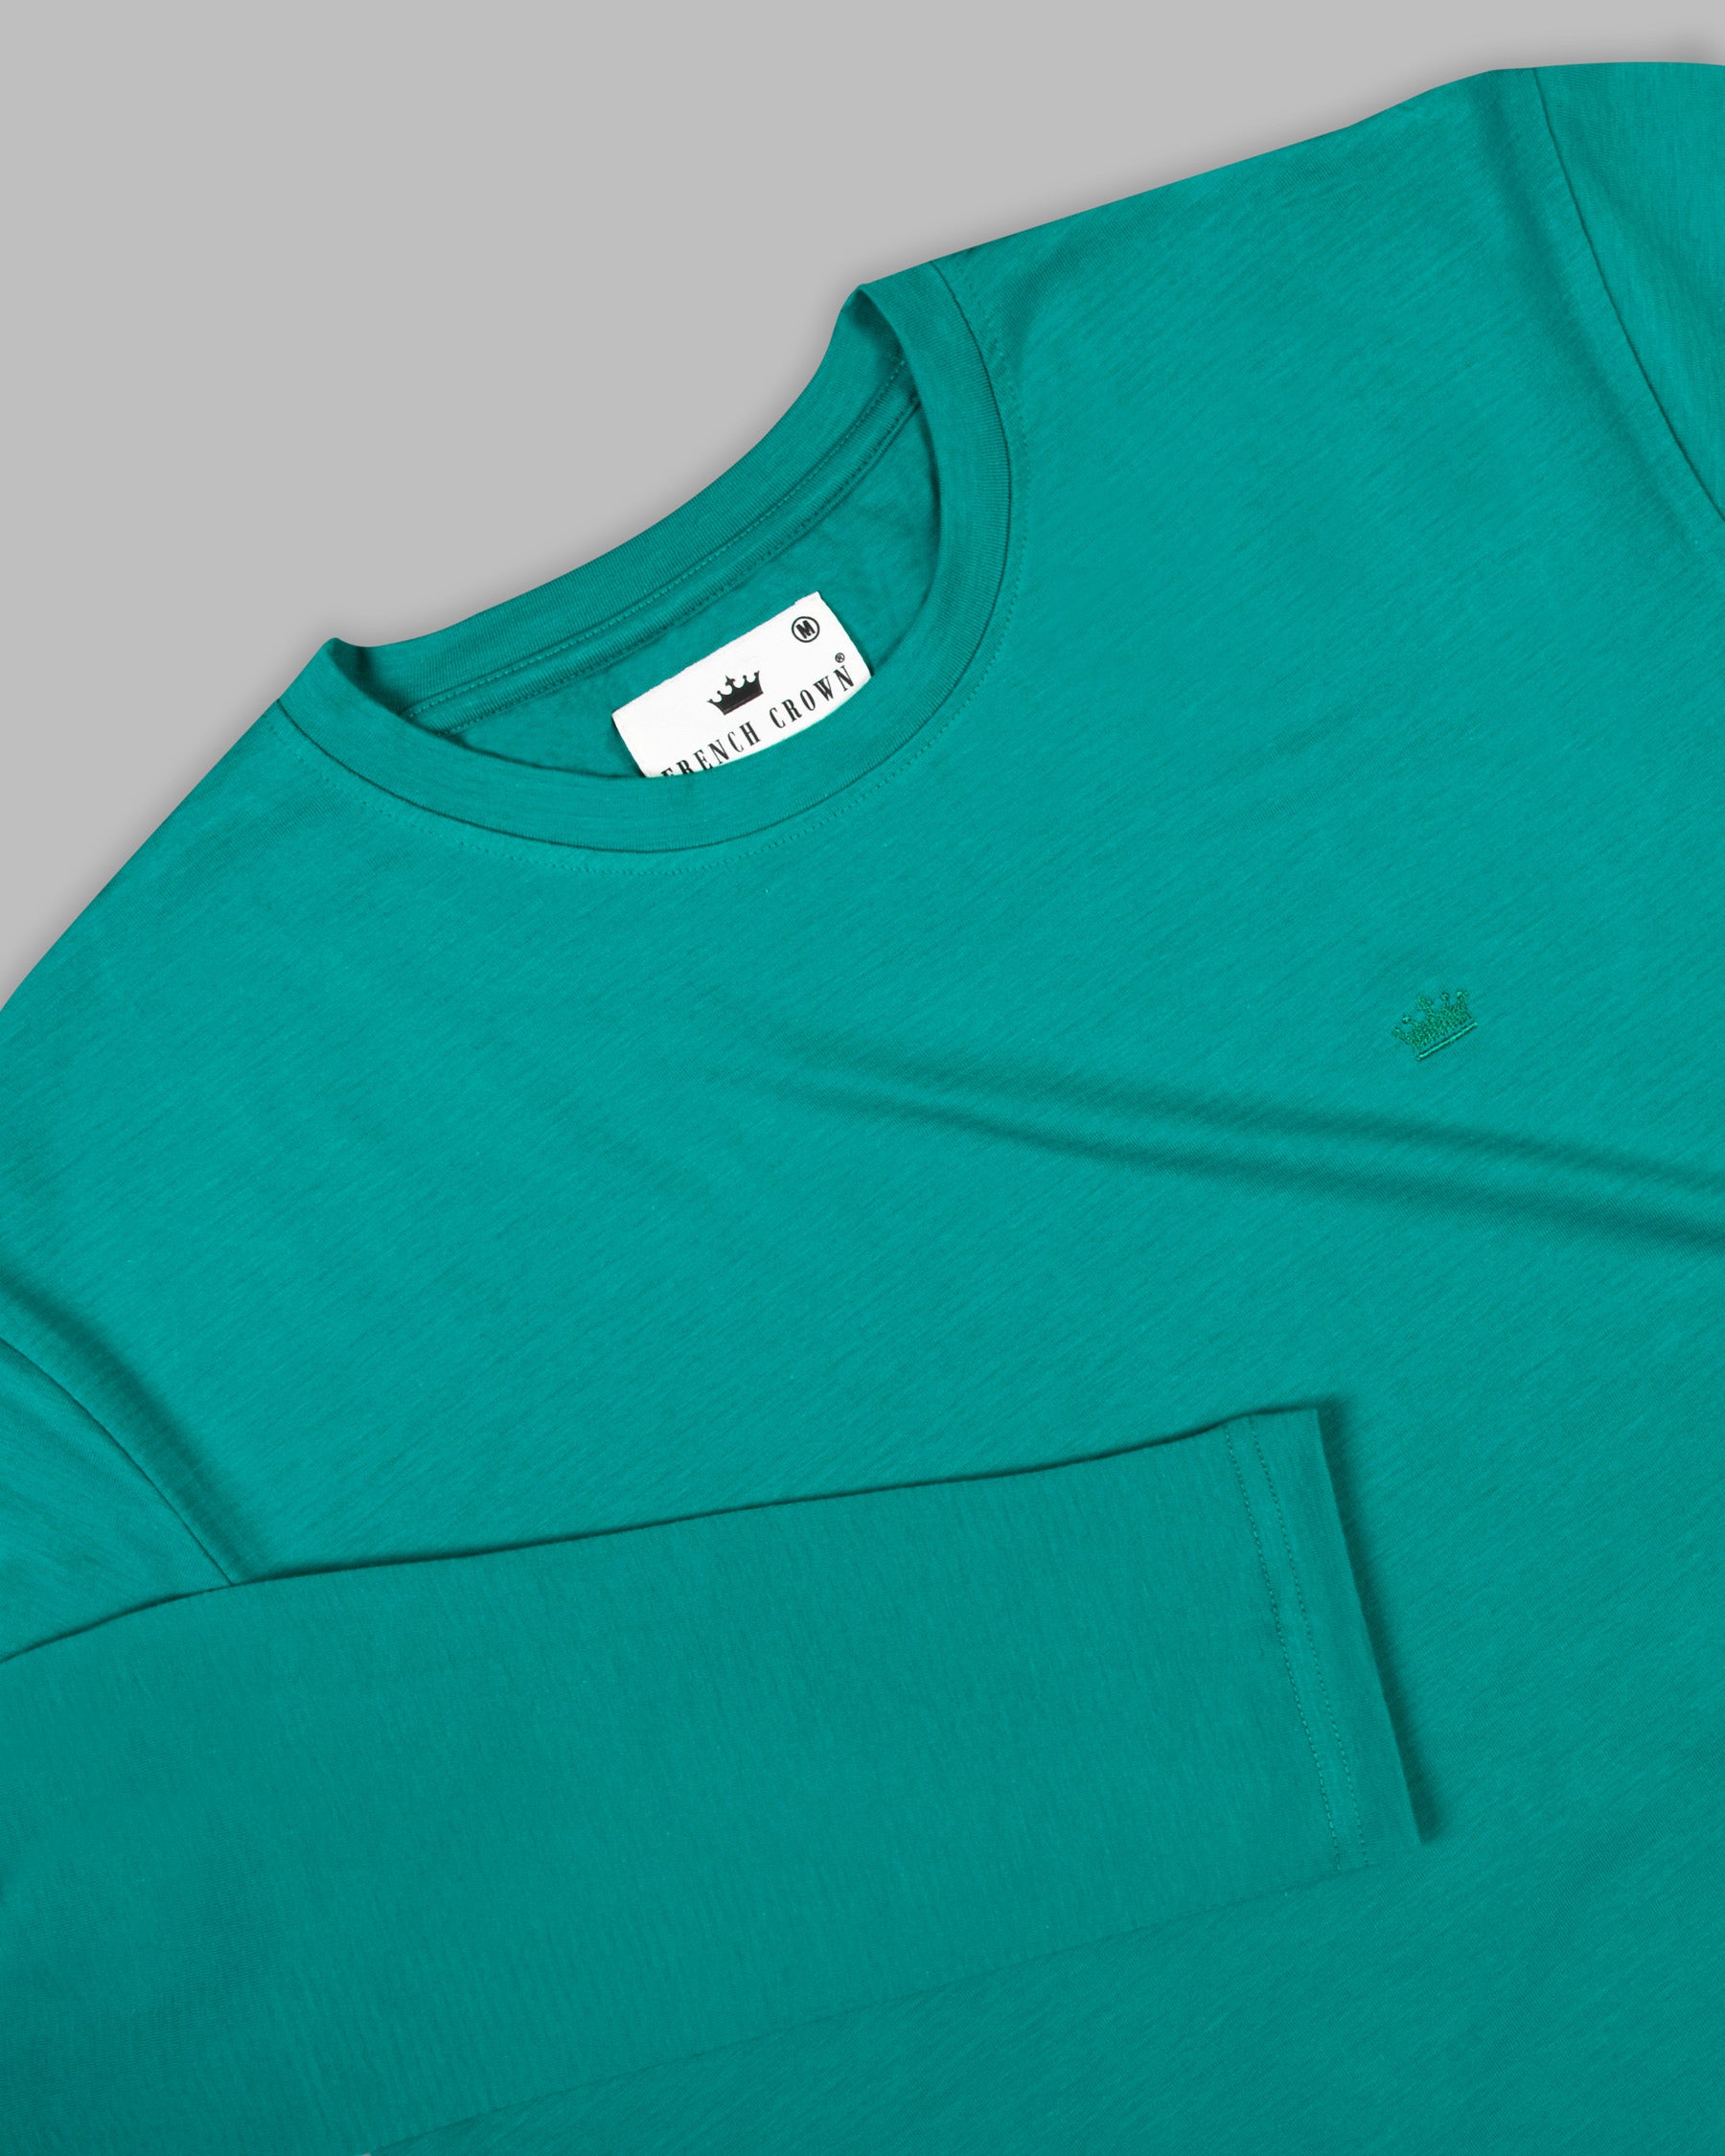 Turquoise Slubbed Full-Sleeve Super soft Supima Organic Cotton Jersey T-shirt TS147-S, TS147-M, TS147-XL, TS147-XXL, TS147-L